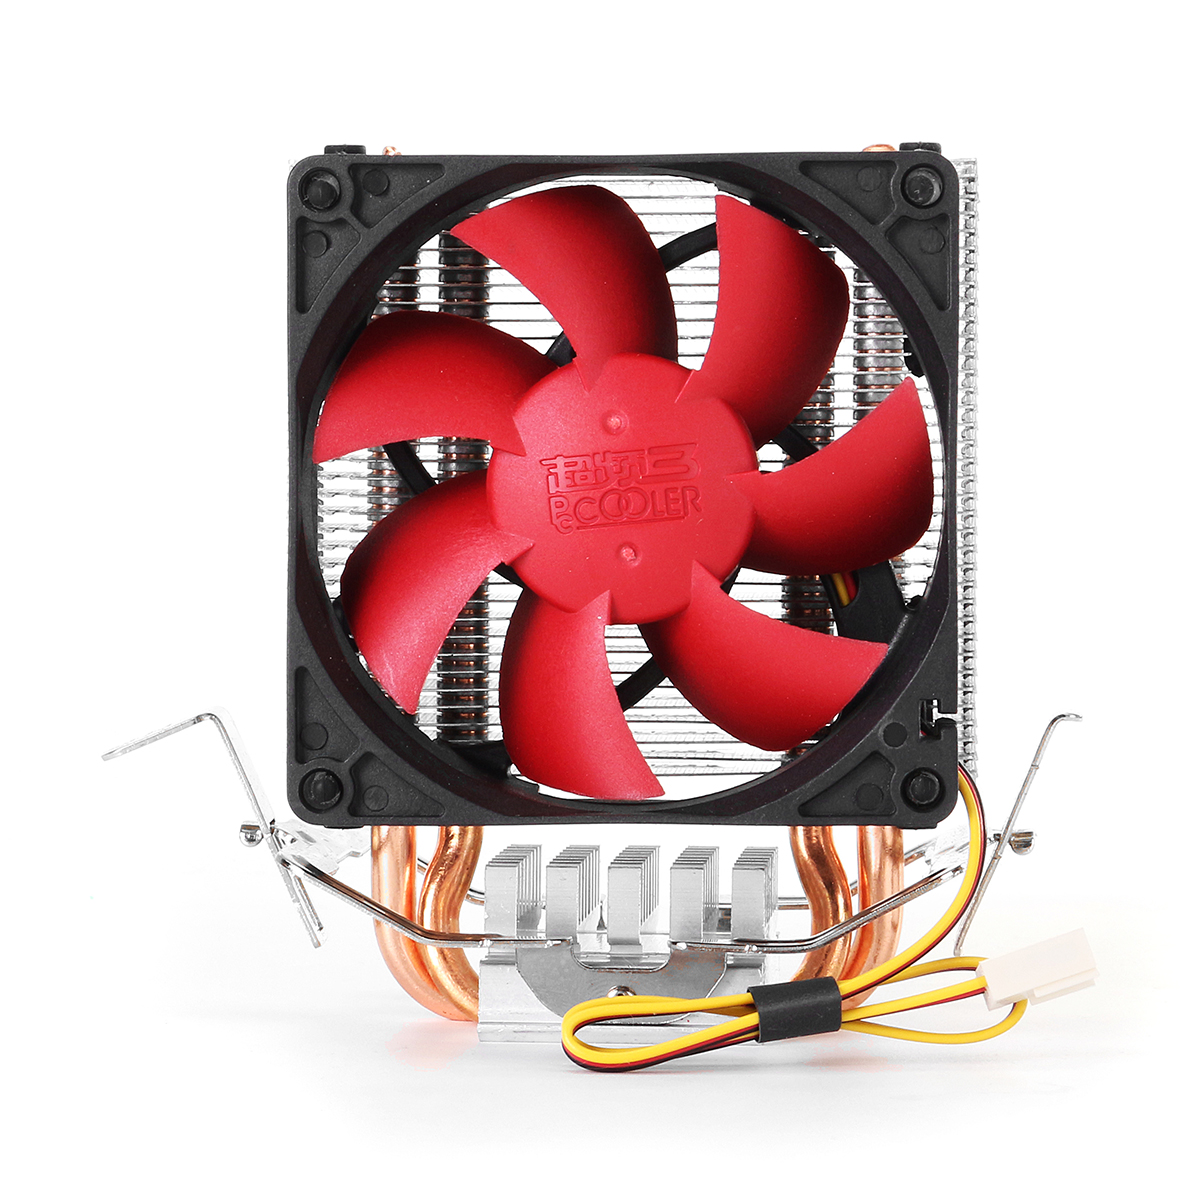 

PCCOOLER 80mm 3 Pin DC 12V CPU Cooling Fan Hydraumatic Cooler Heatsink for Intel AMD